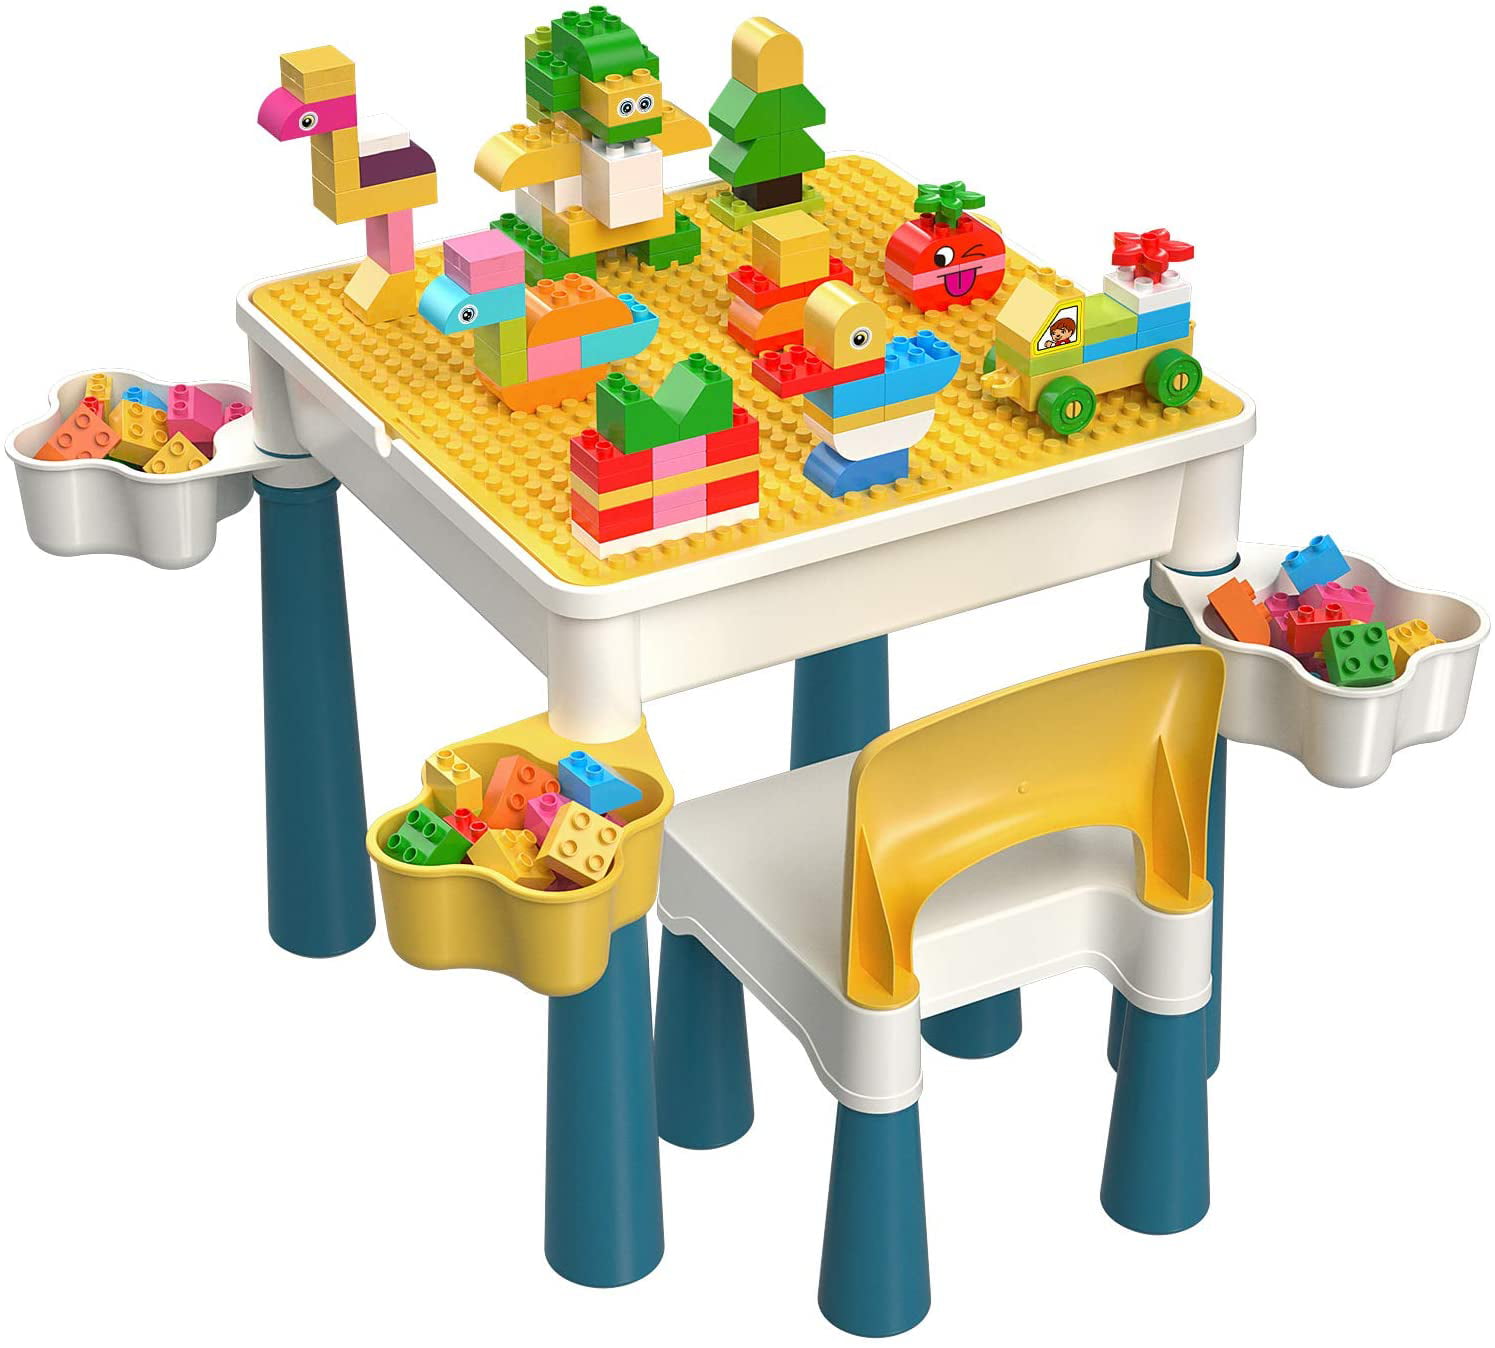 Details about   Kids Table &Chair Desk Set Children Activity Play Build Building Blocks Table AW 